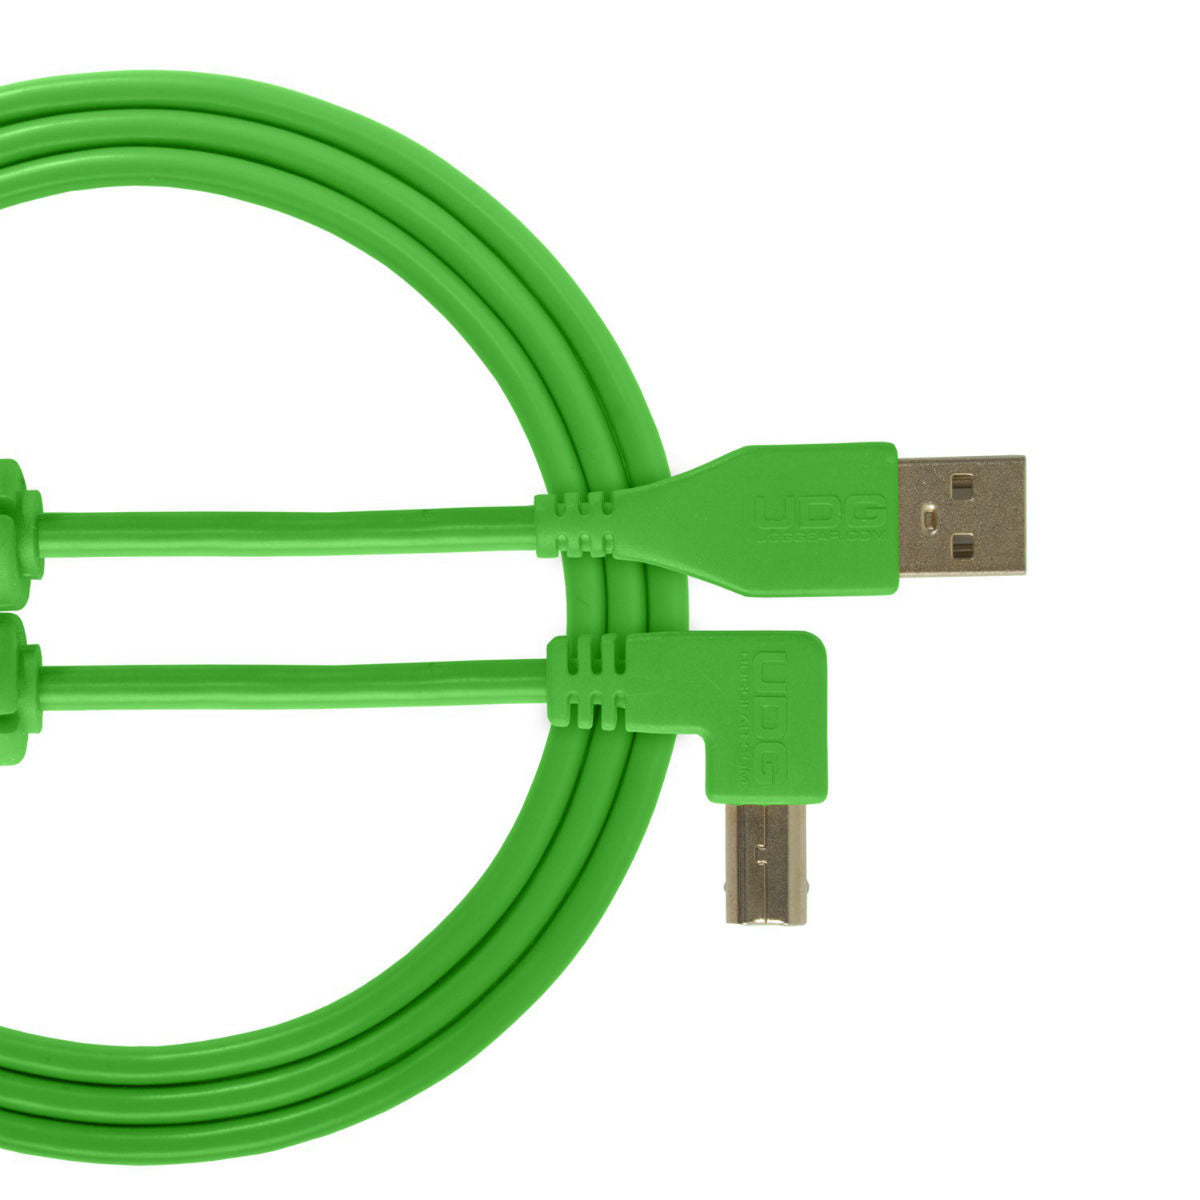 UDG USB Cable A-B 3m Green Angled U95006GR